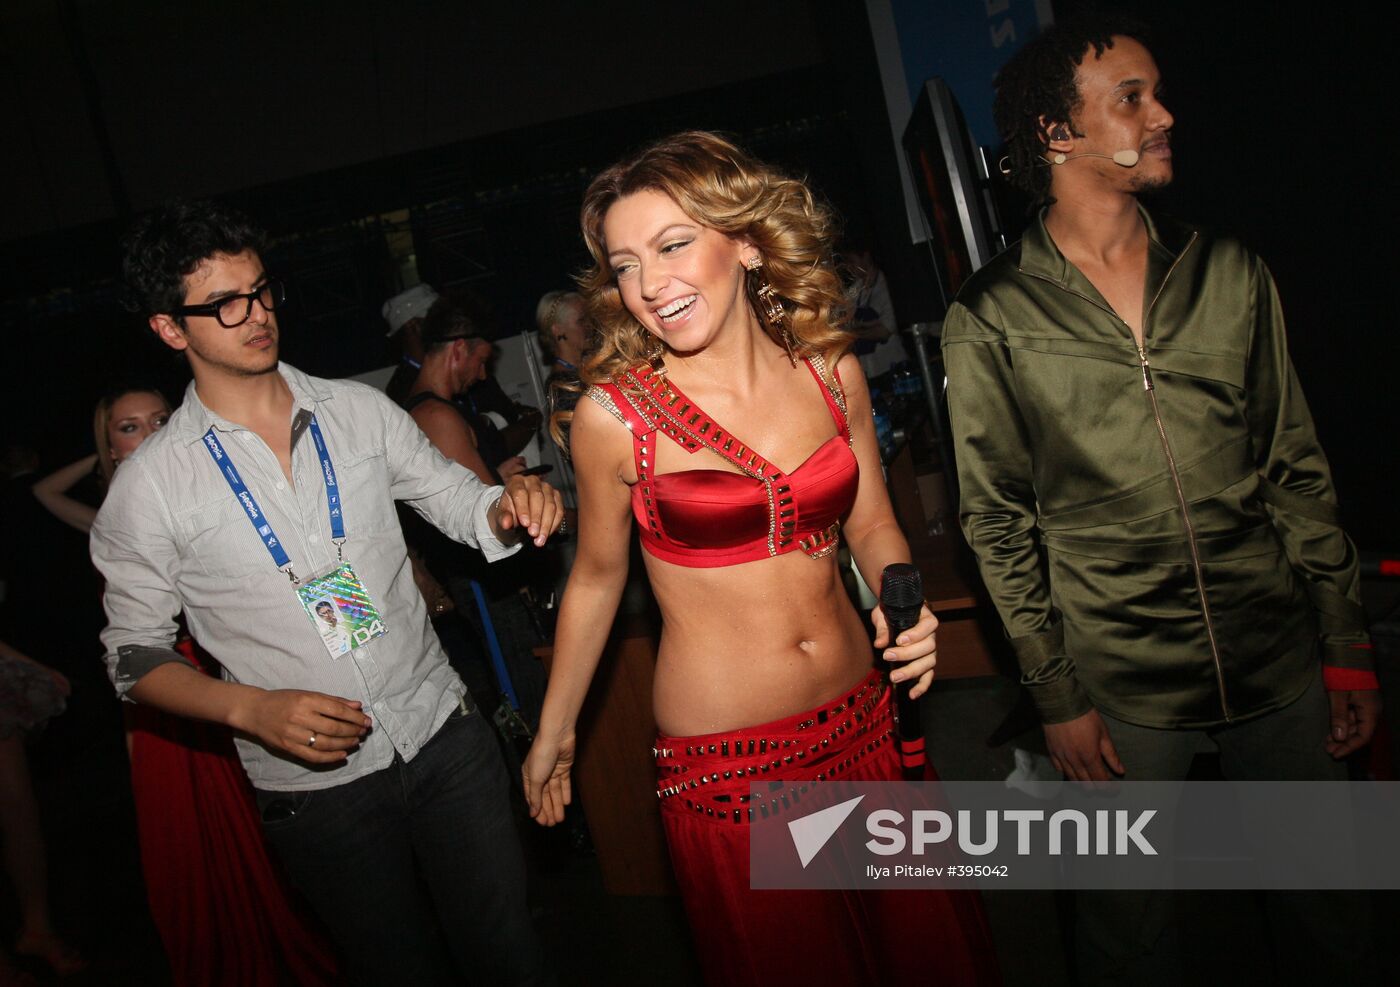 Turkey's 2009 Eurovision entry Hadise